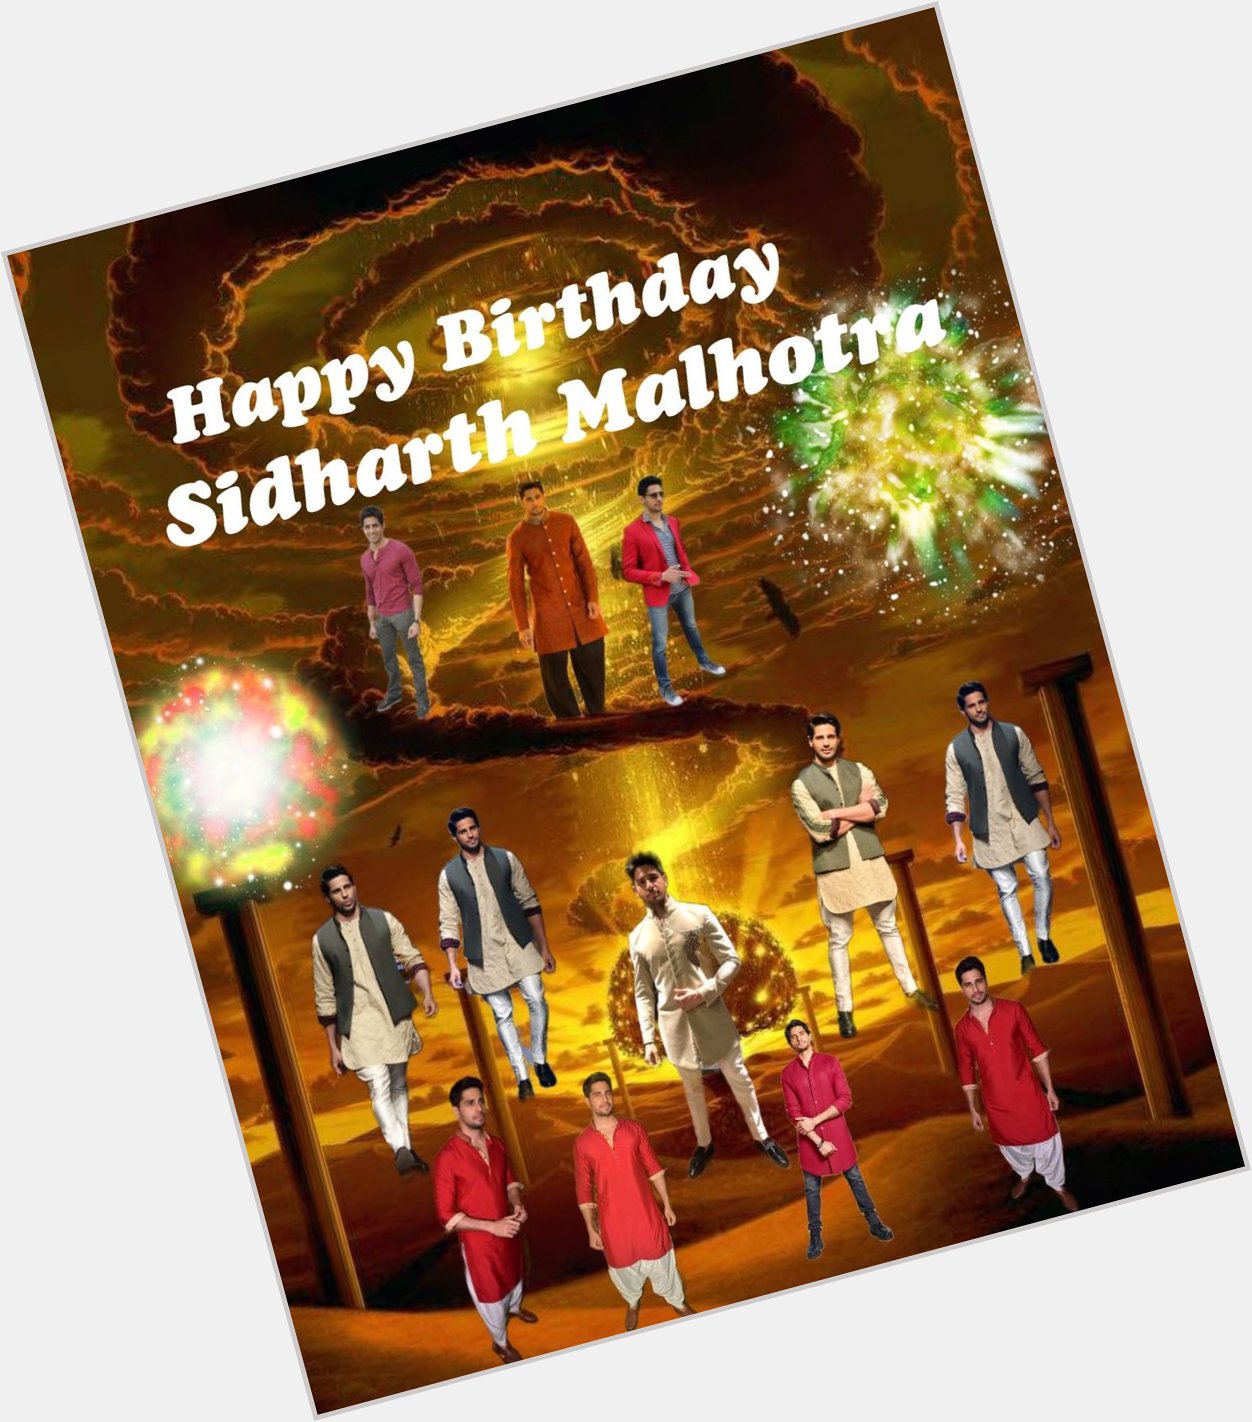 Happy Birthday Sidharth Malhotra   